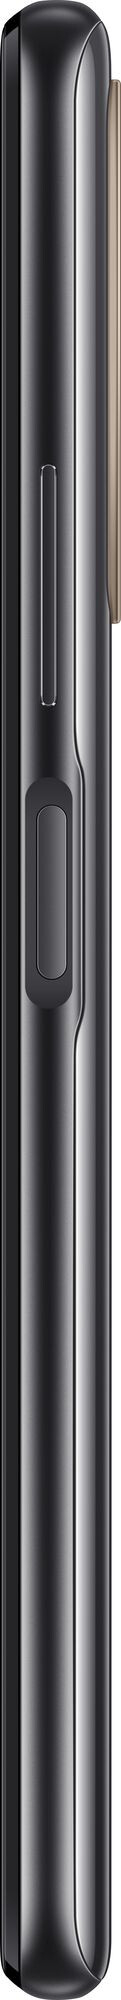 Смартфон Huawei P smart (2021) 4/128GB Midnight Black (Черный)